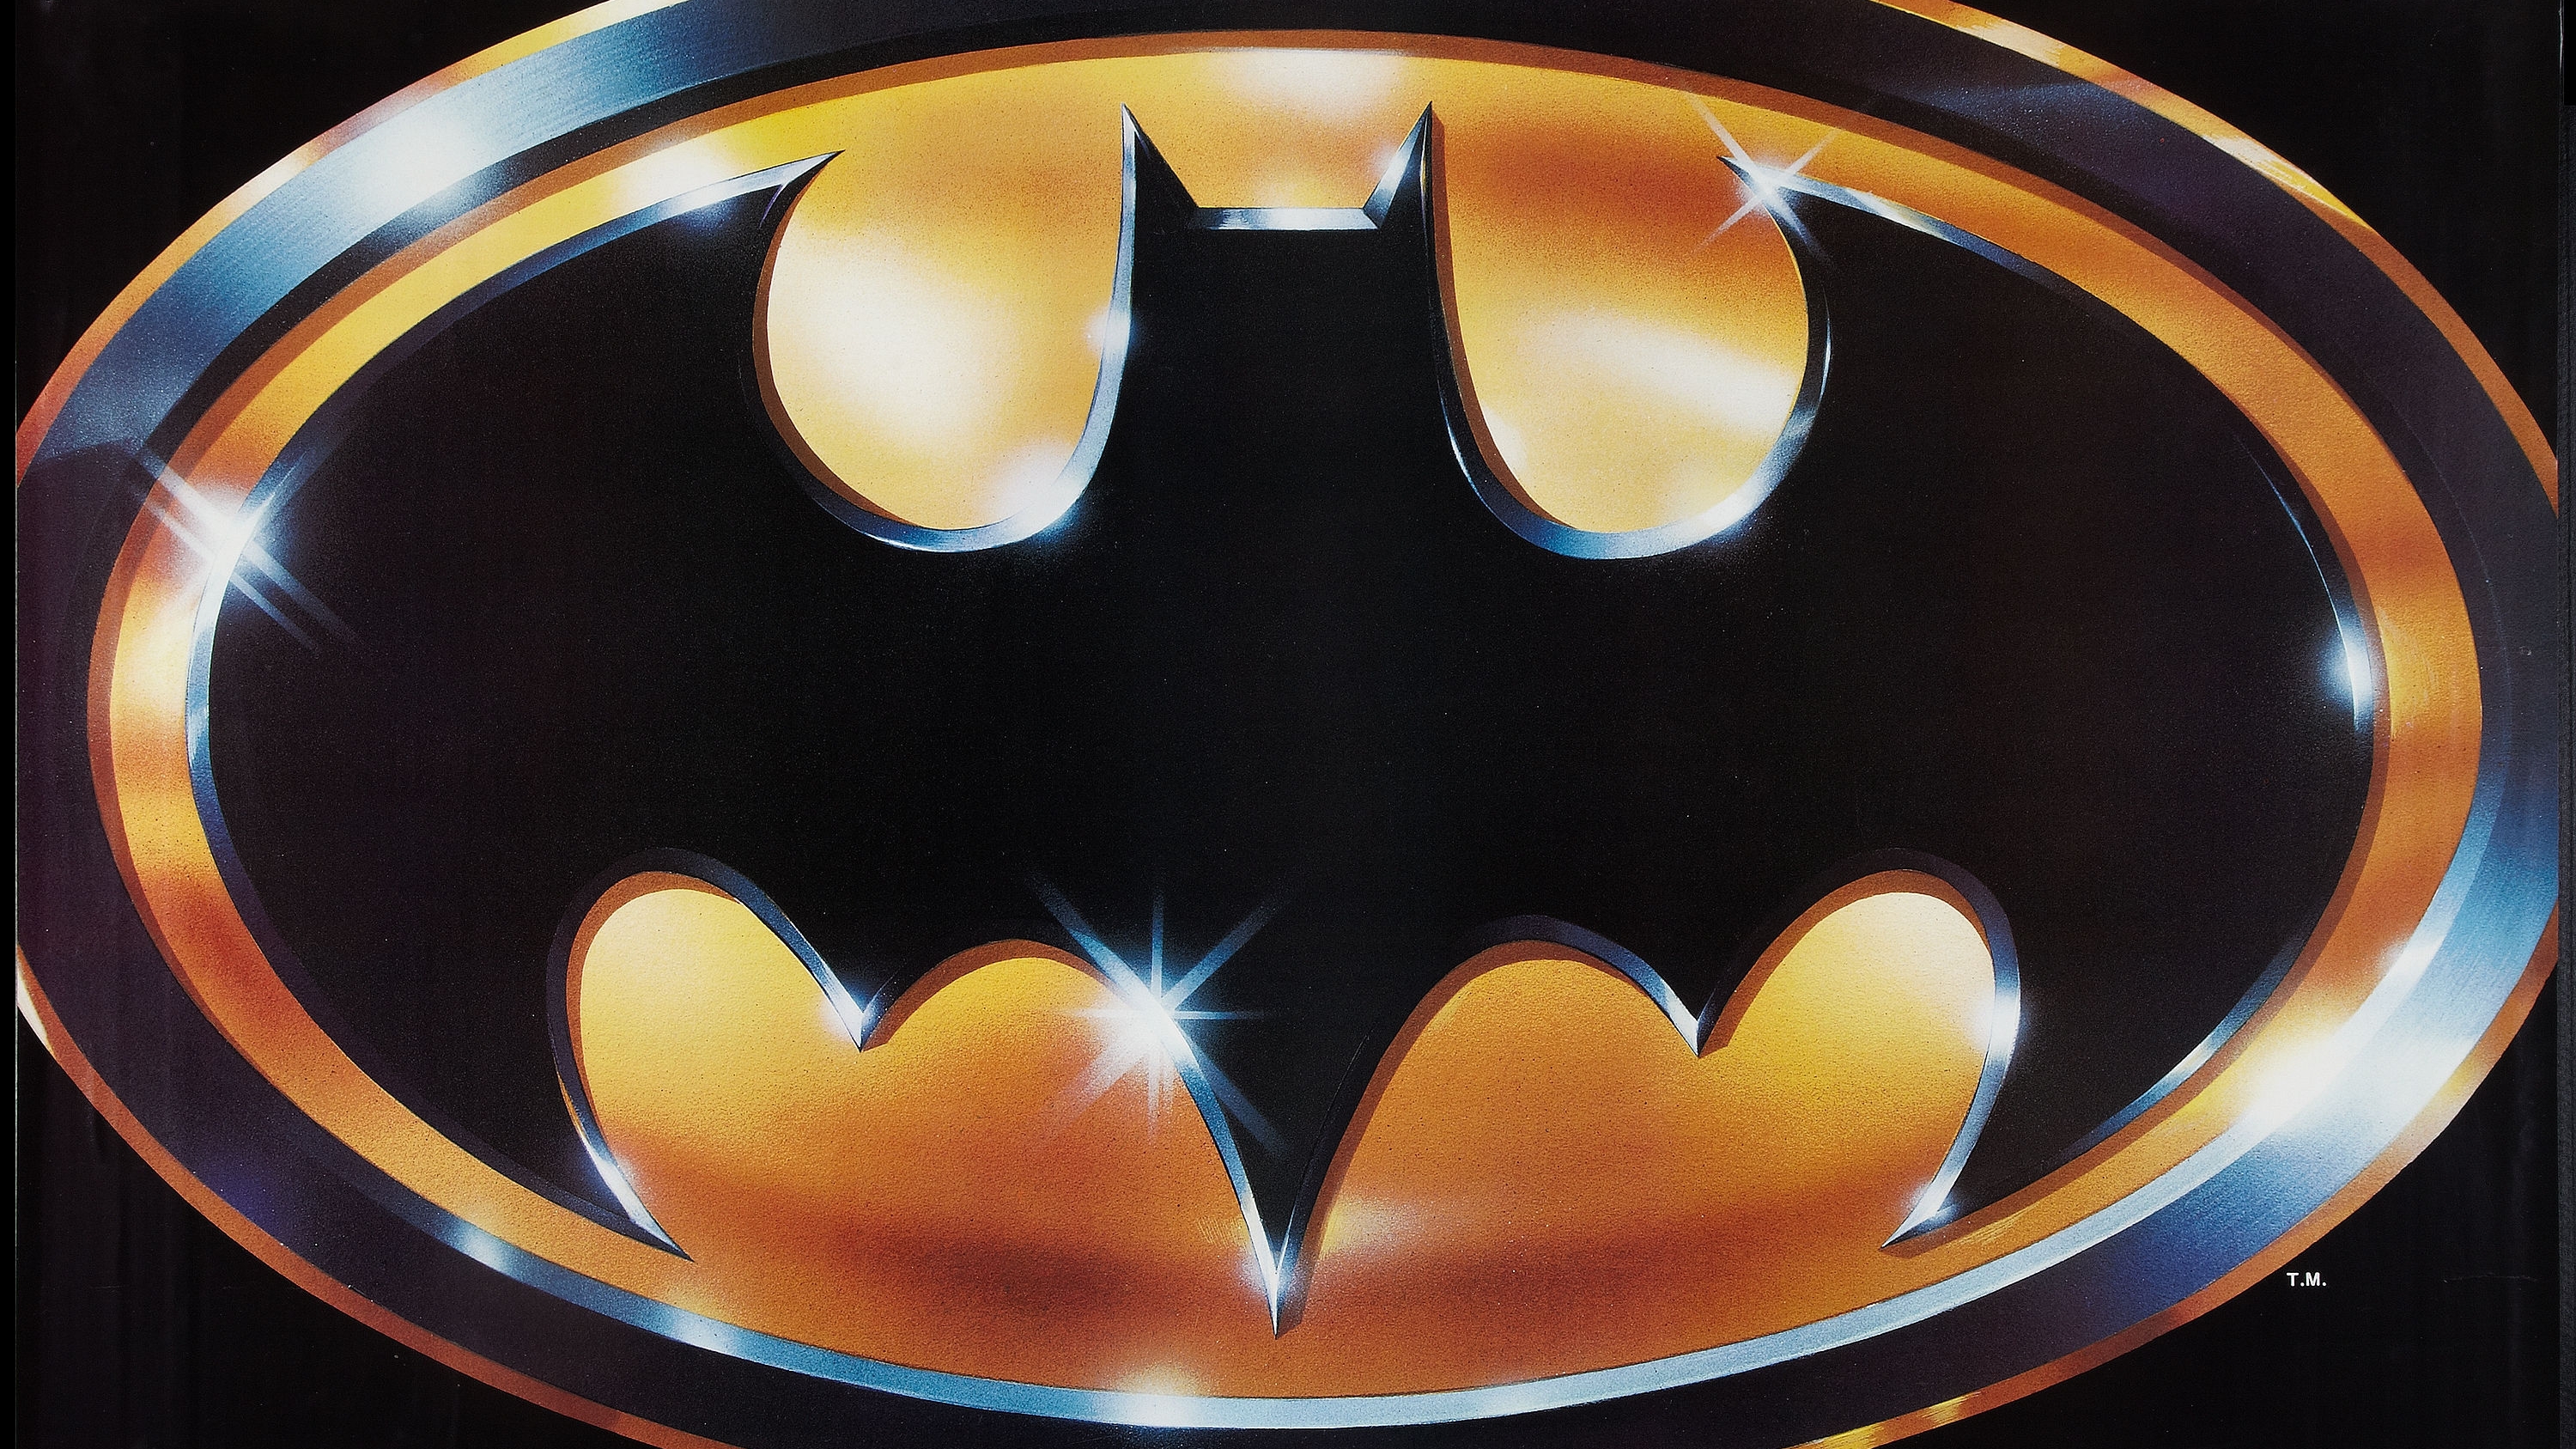 Batman Symbol wallpapers for desktop, download free Batman Symbol pictures  and backgrounds for PC 